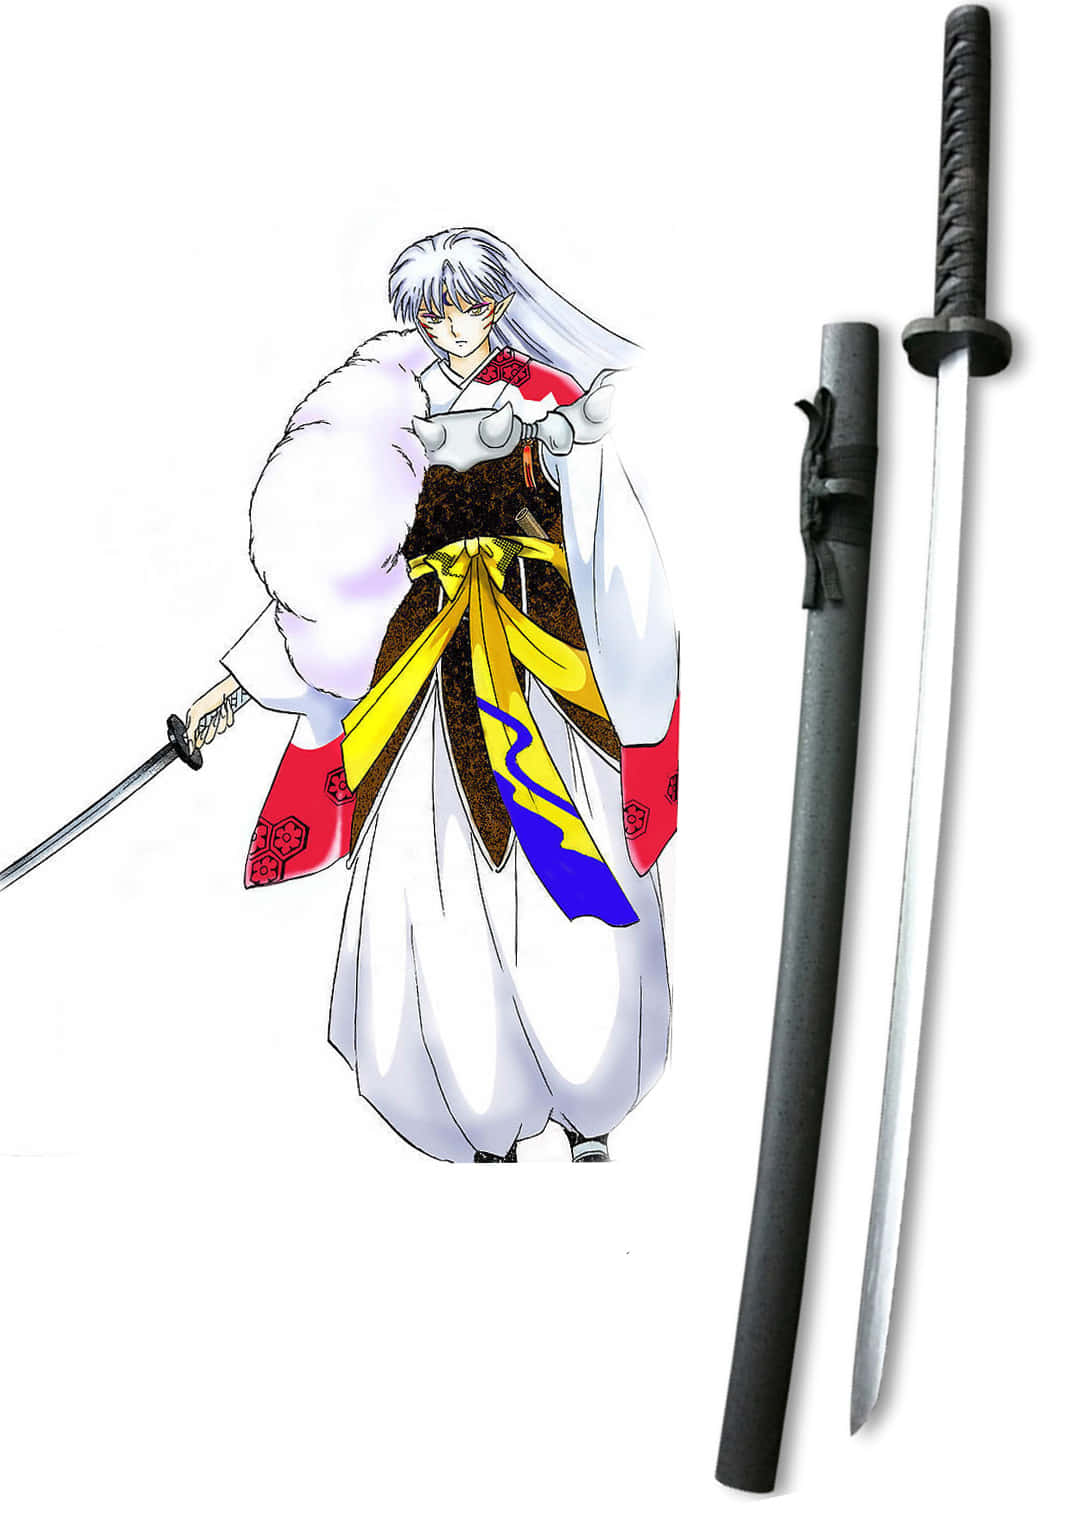 The Powerful Tenseiga Sword in a Battle Wallpaper